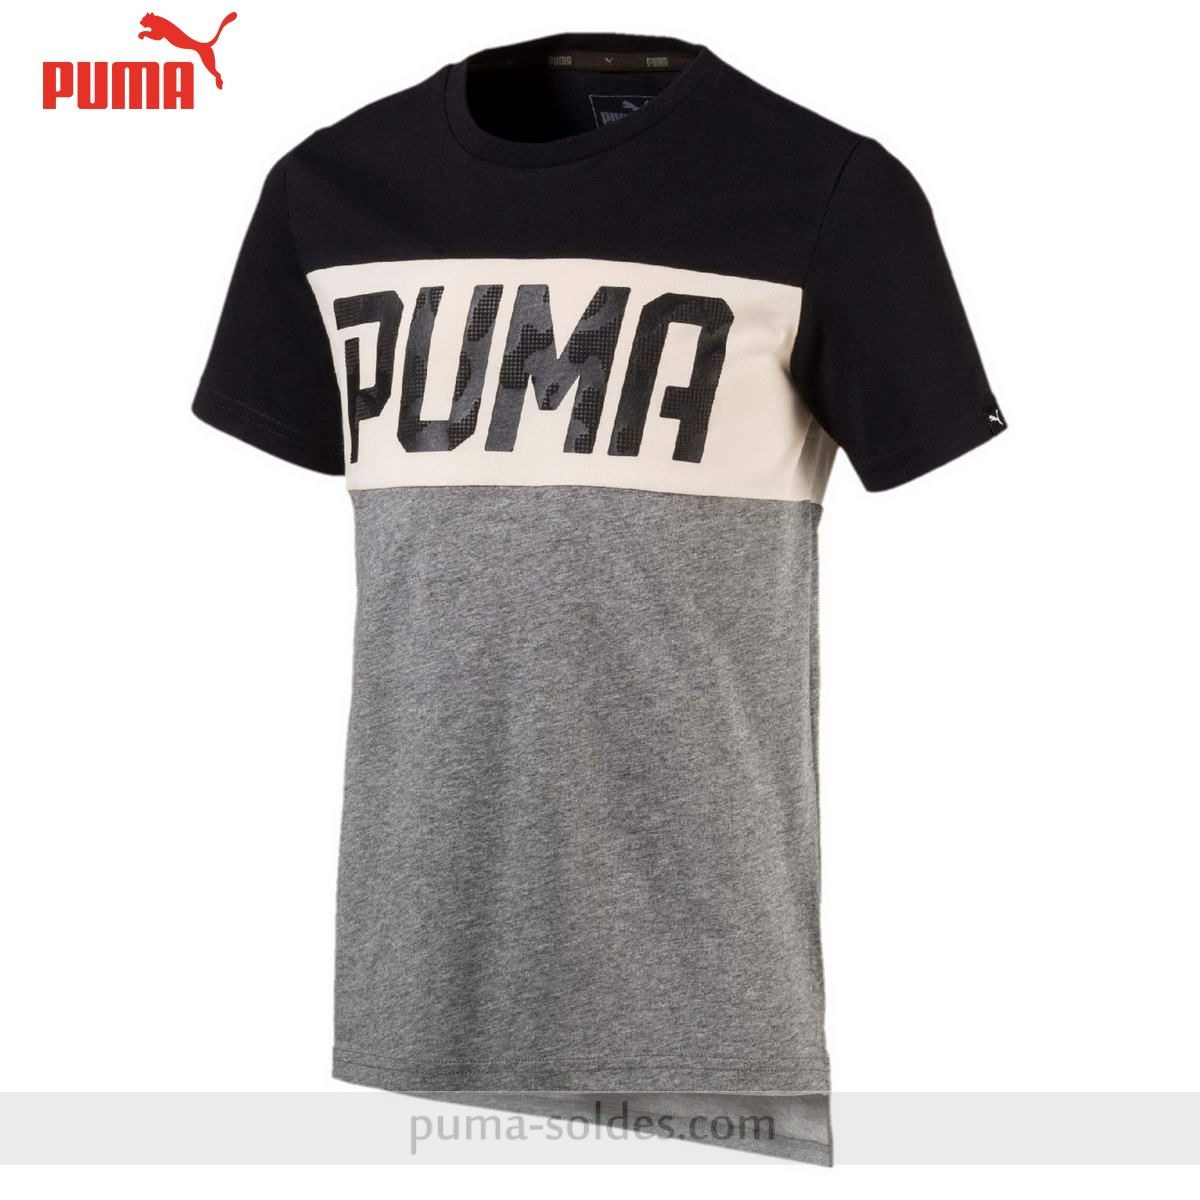 tee shirt puma prix